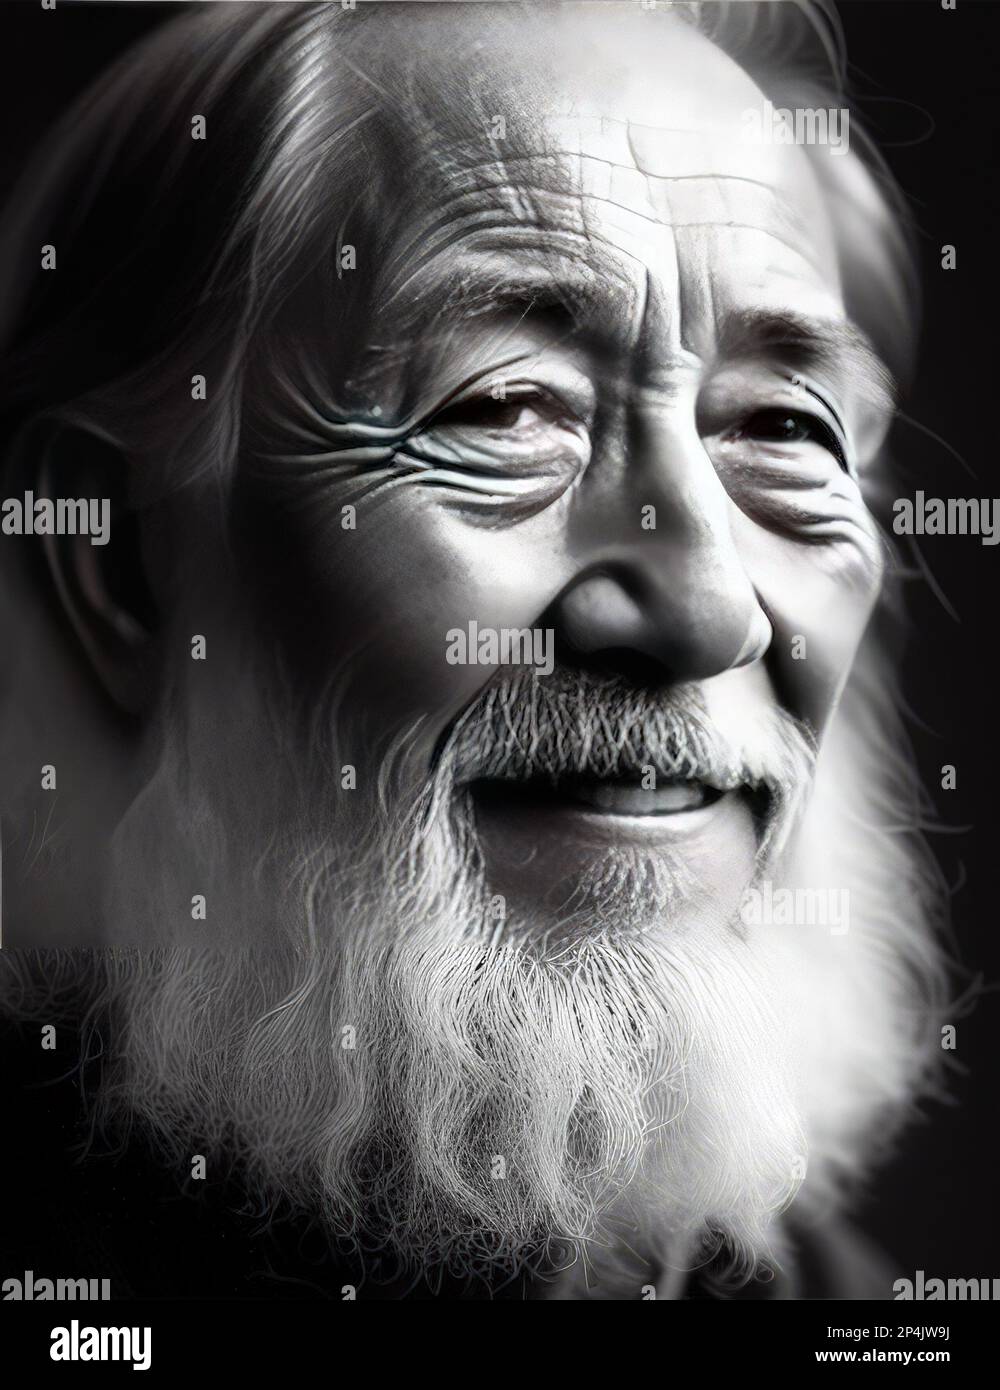 portraits old man, woman Stock Photo - Alamy